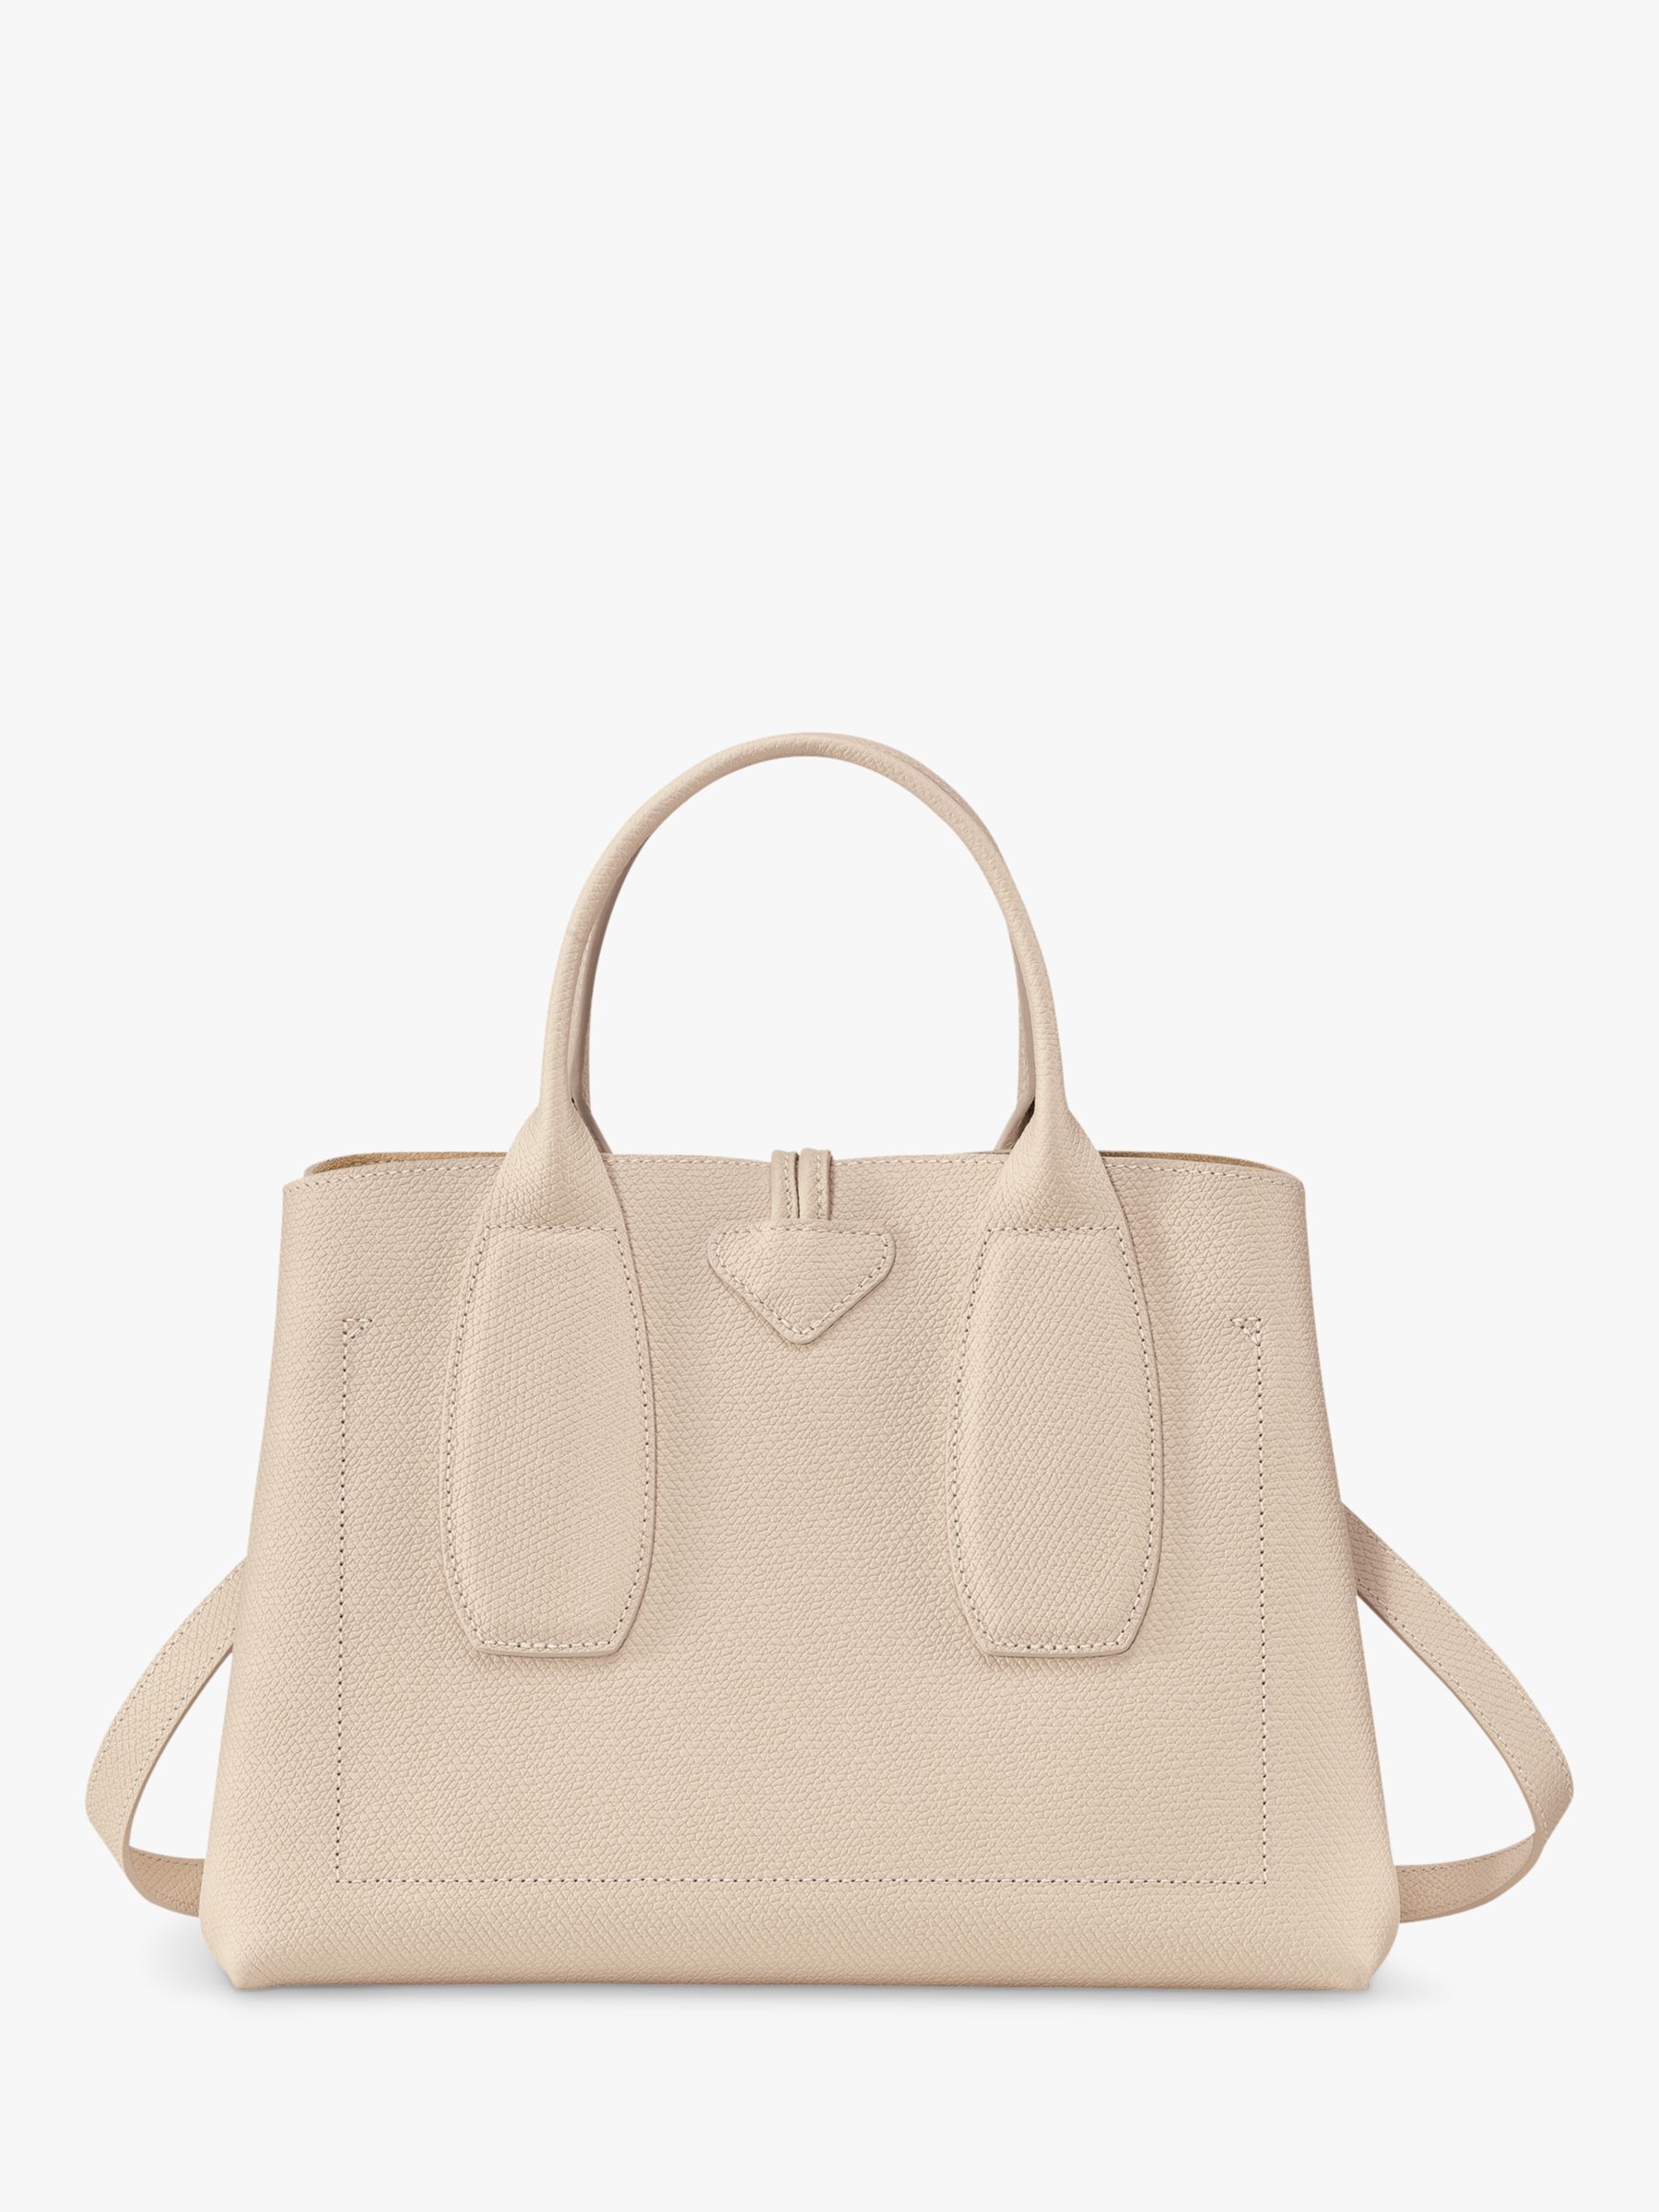 Buy Longchamp Roseau Medium Leather Top Handle Bag Online at johnlewis.com